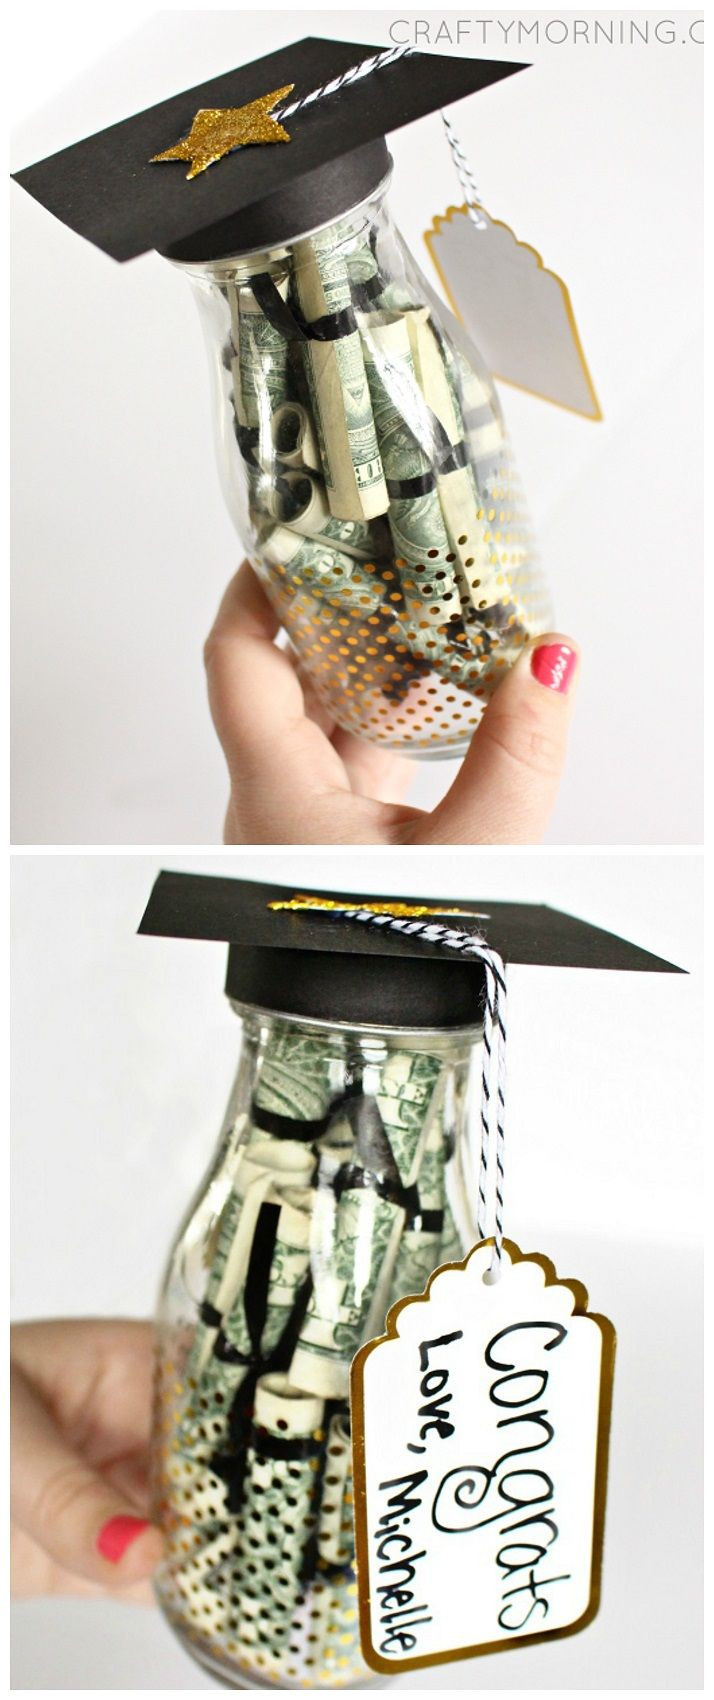 Graduation Gift Ideas For College Graduates
 25 Best Ideas about College Graduation Gifts on Pinterest